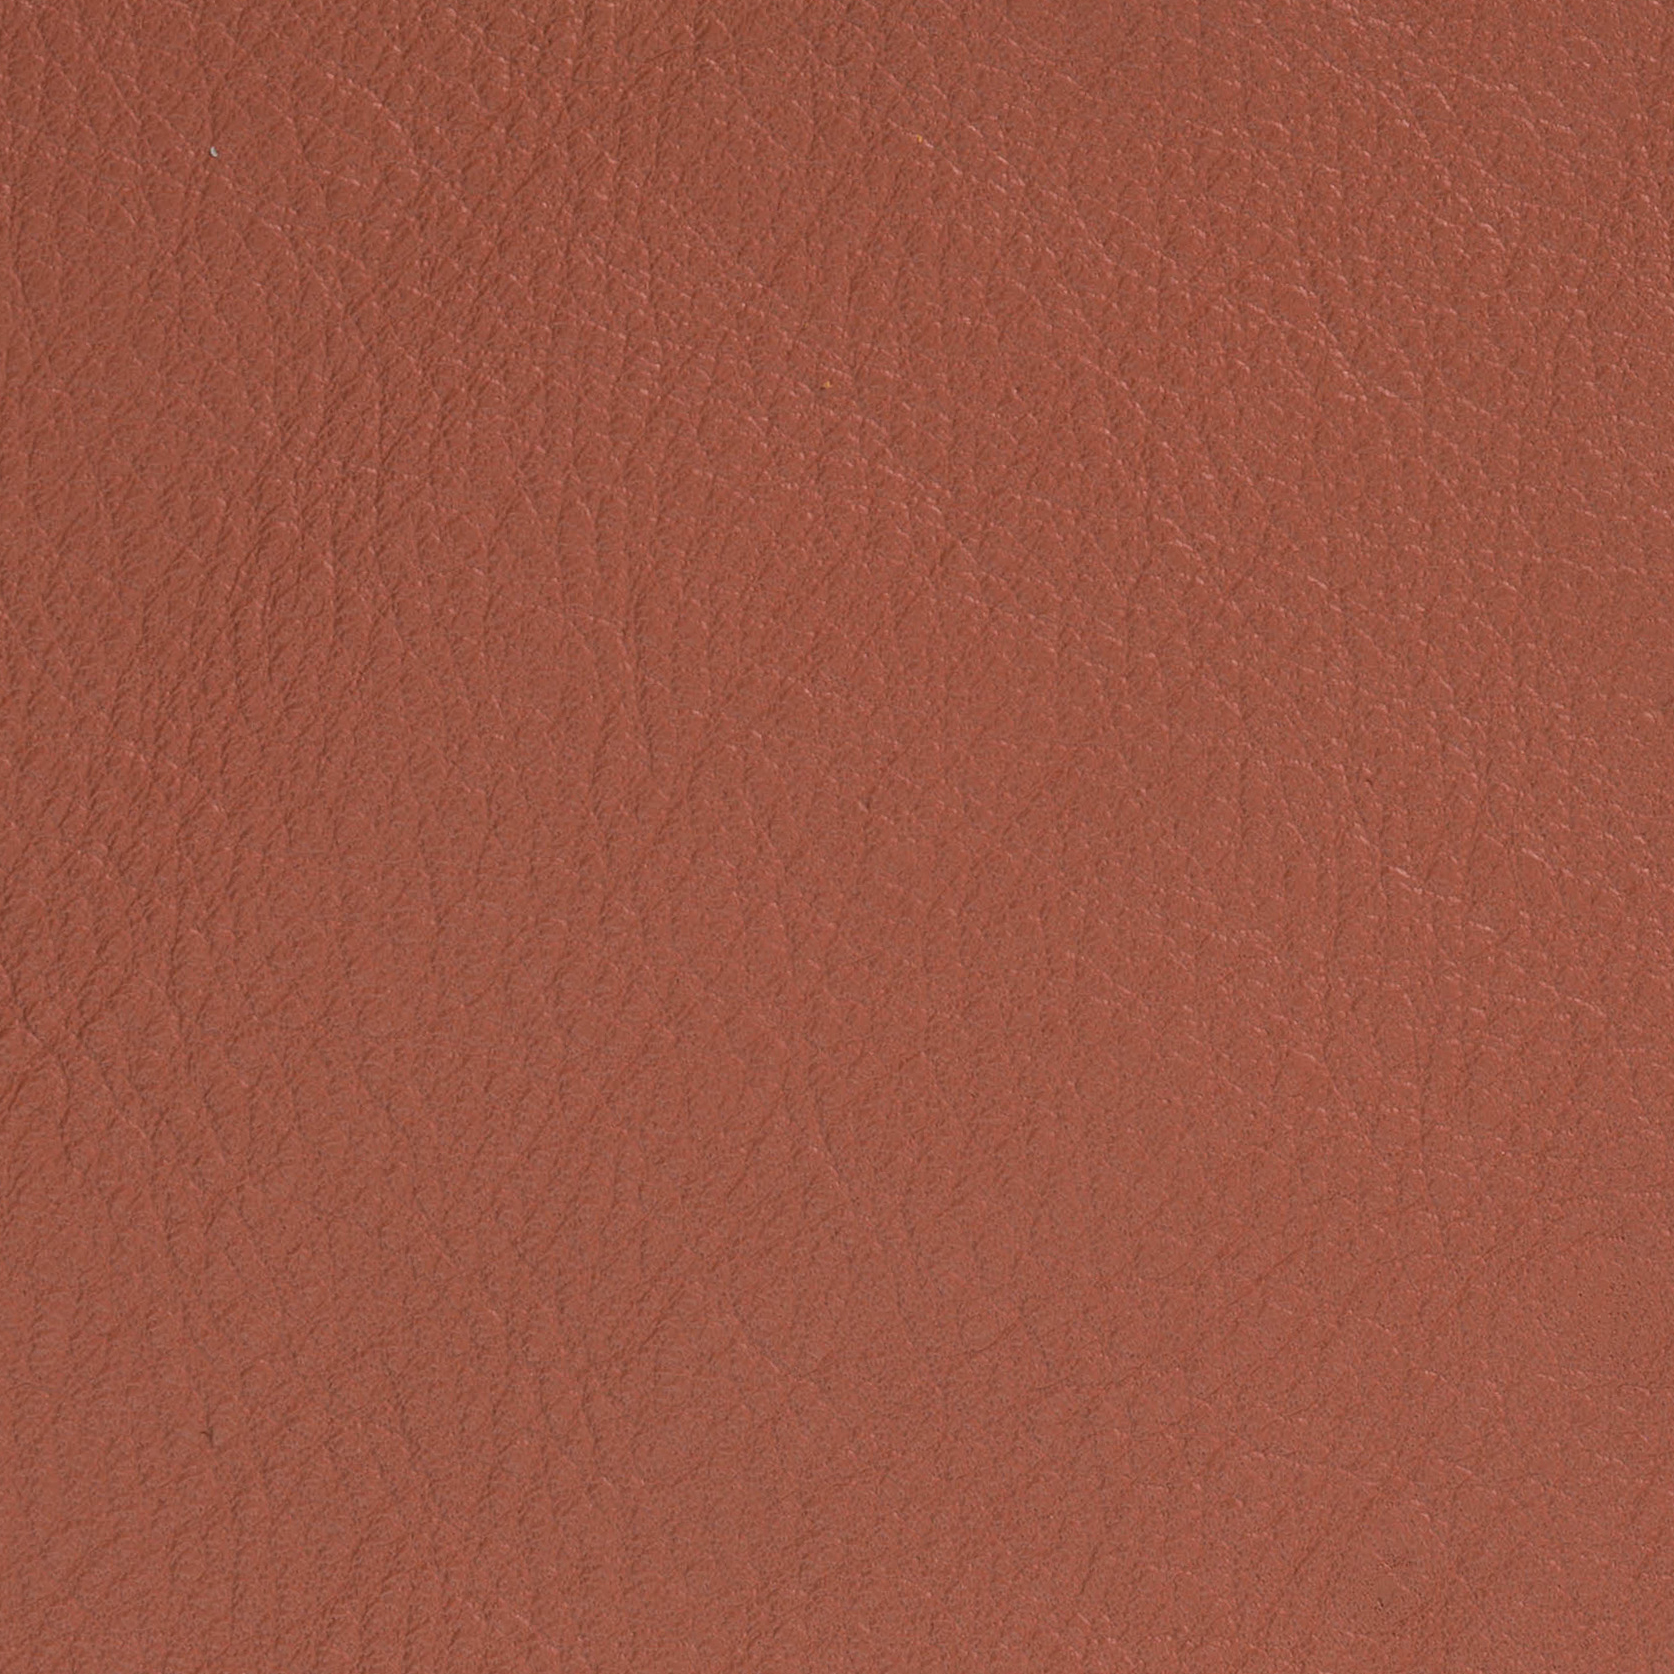 Elmosoft Leather Peru Tan